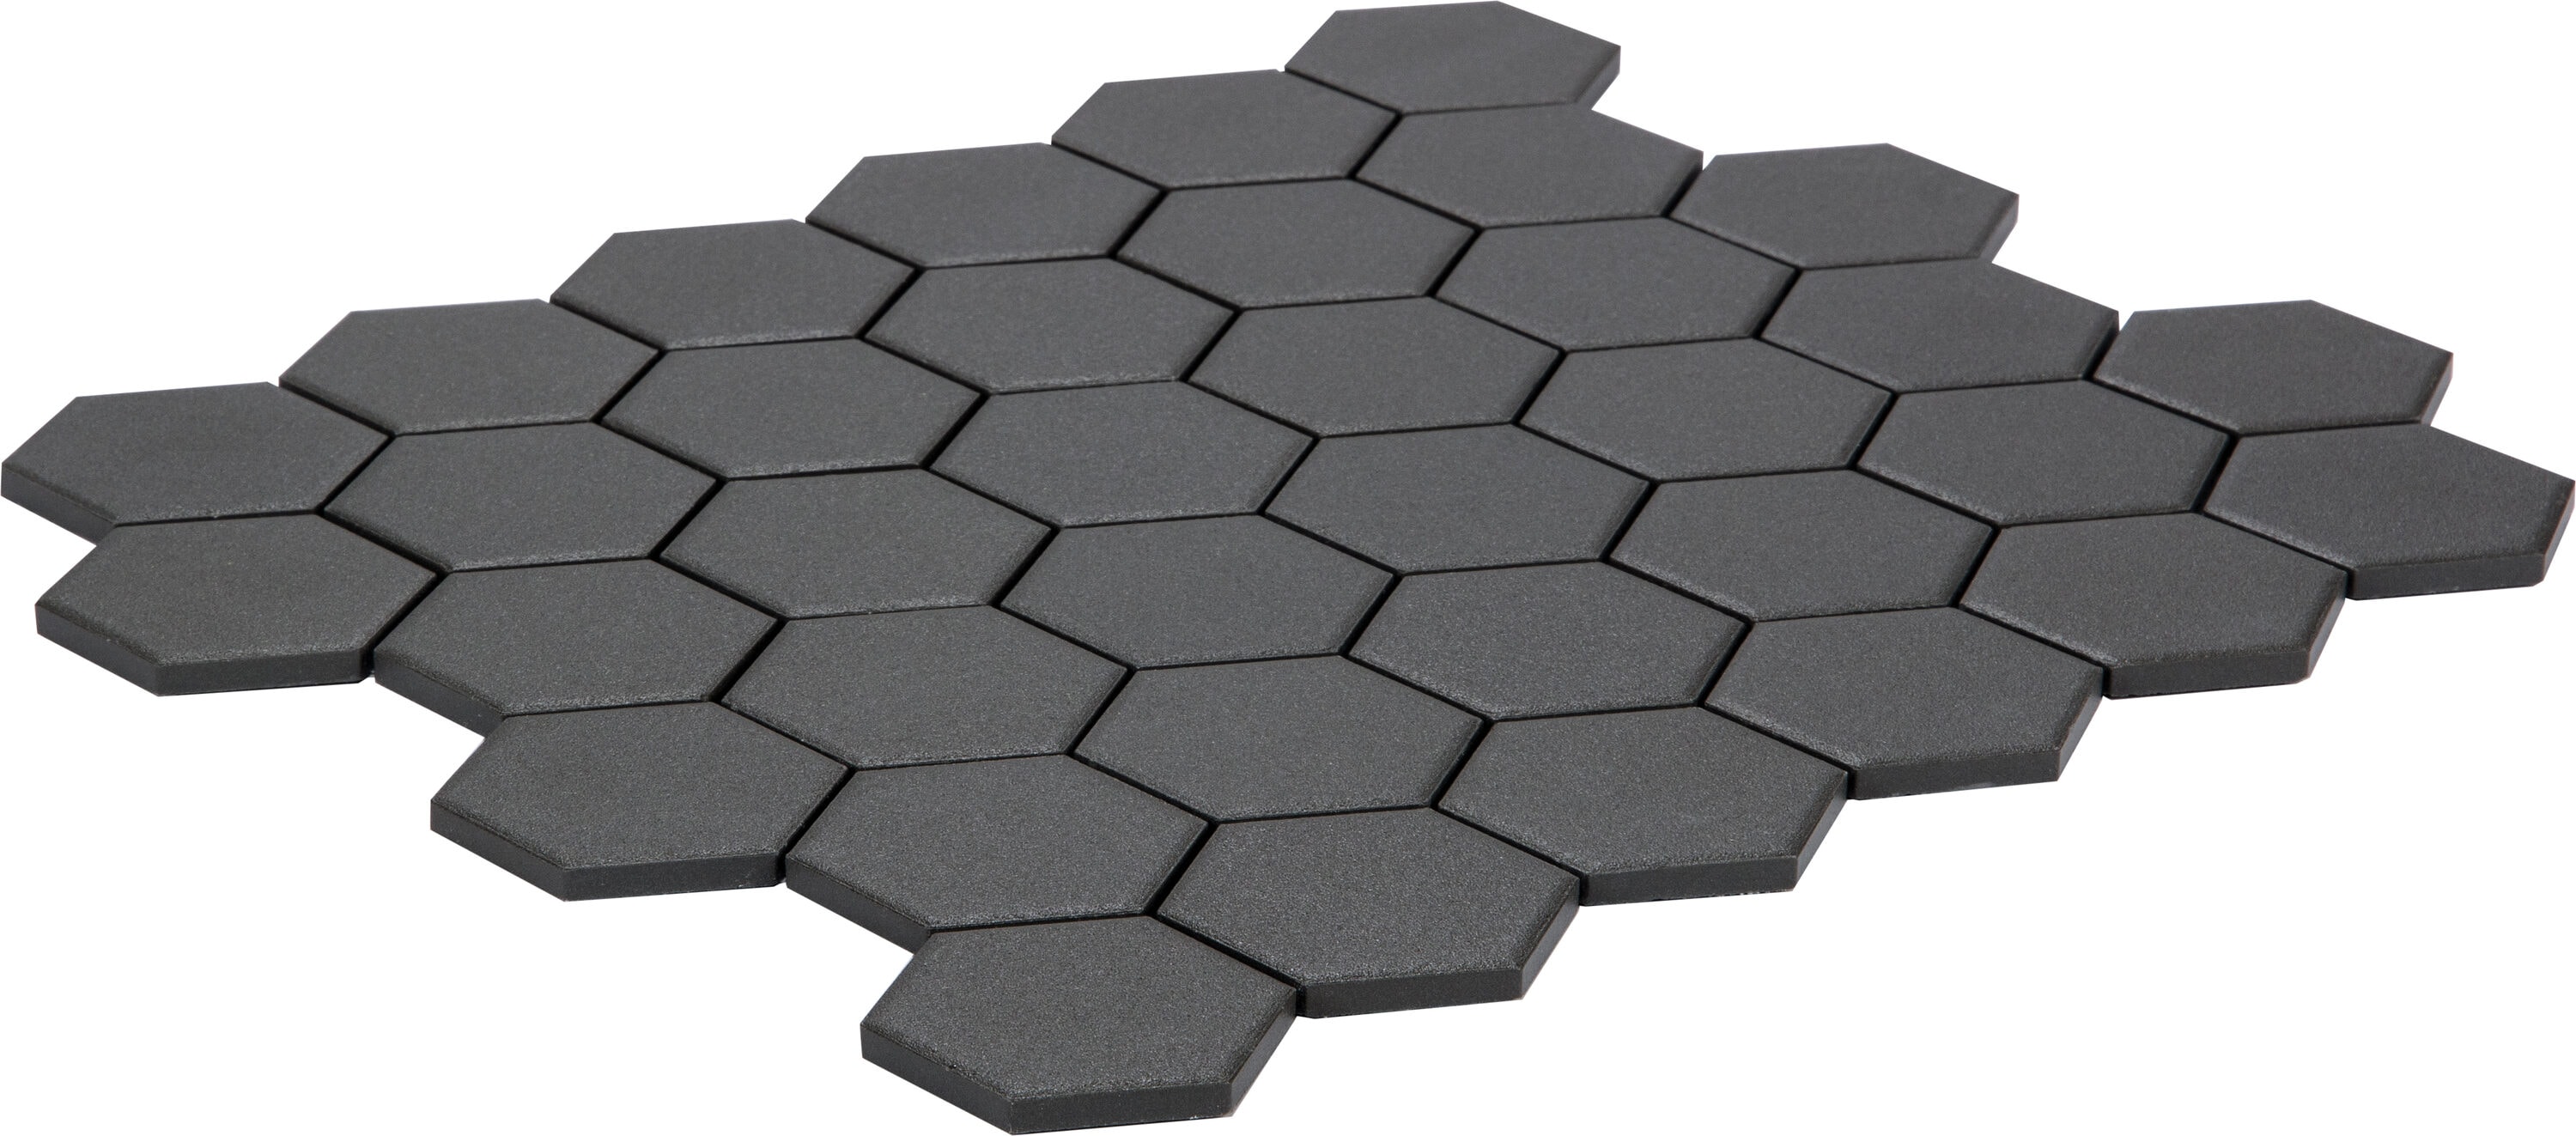 Revestimientos para ducha - Geometrical Tile Mix Grey Dimensión LxA: 1 x  190x80cm Material: Lámina dura Smart